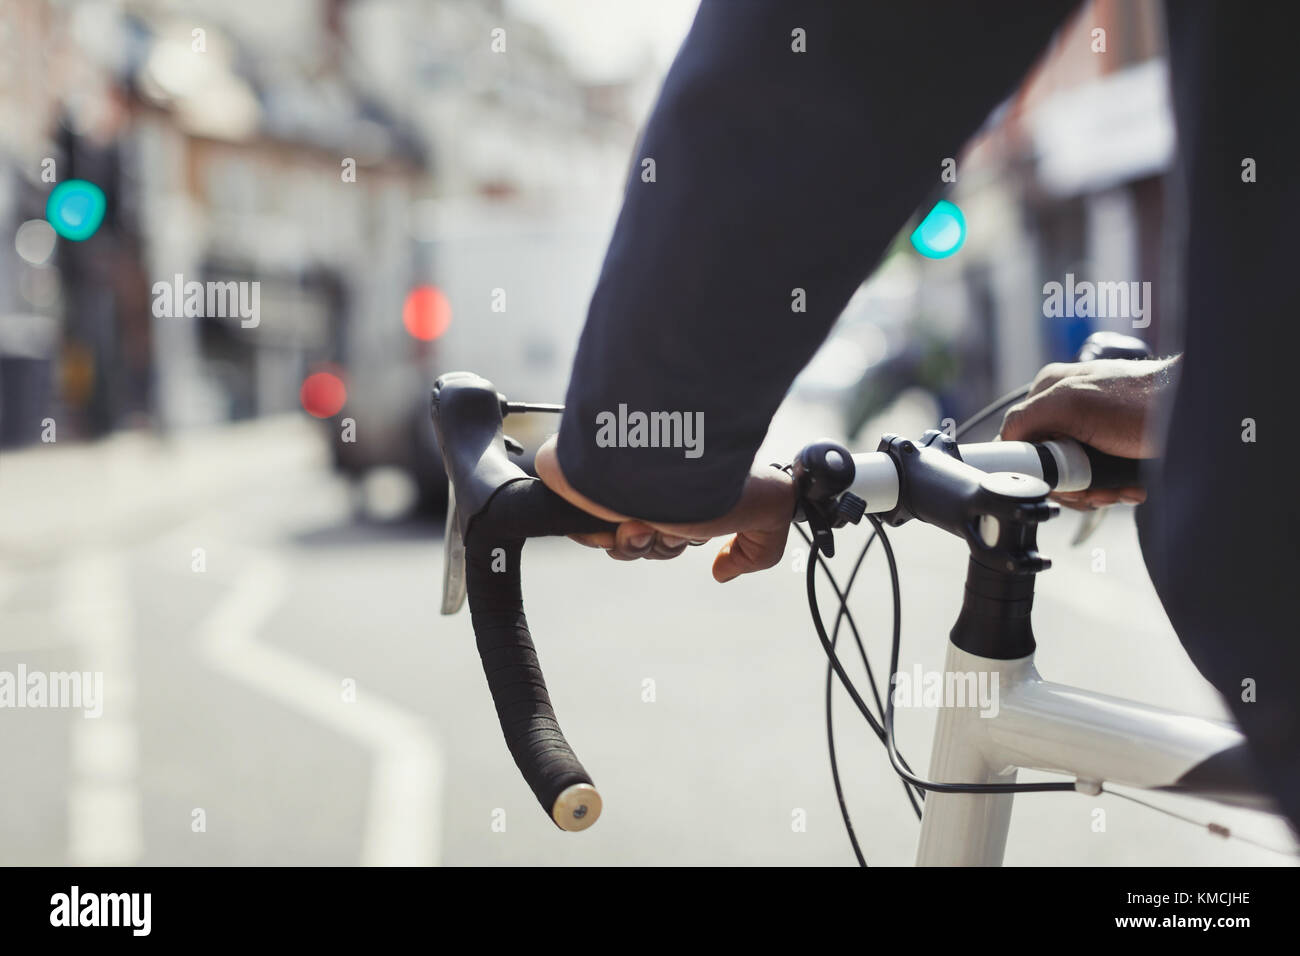 Hands on man on bicycle handlebars, commuting on sunny urban street Stock Photo